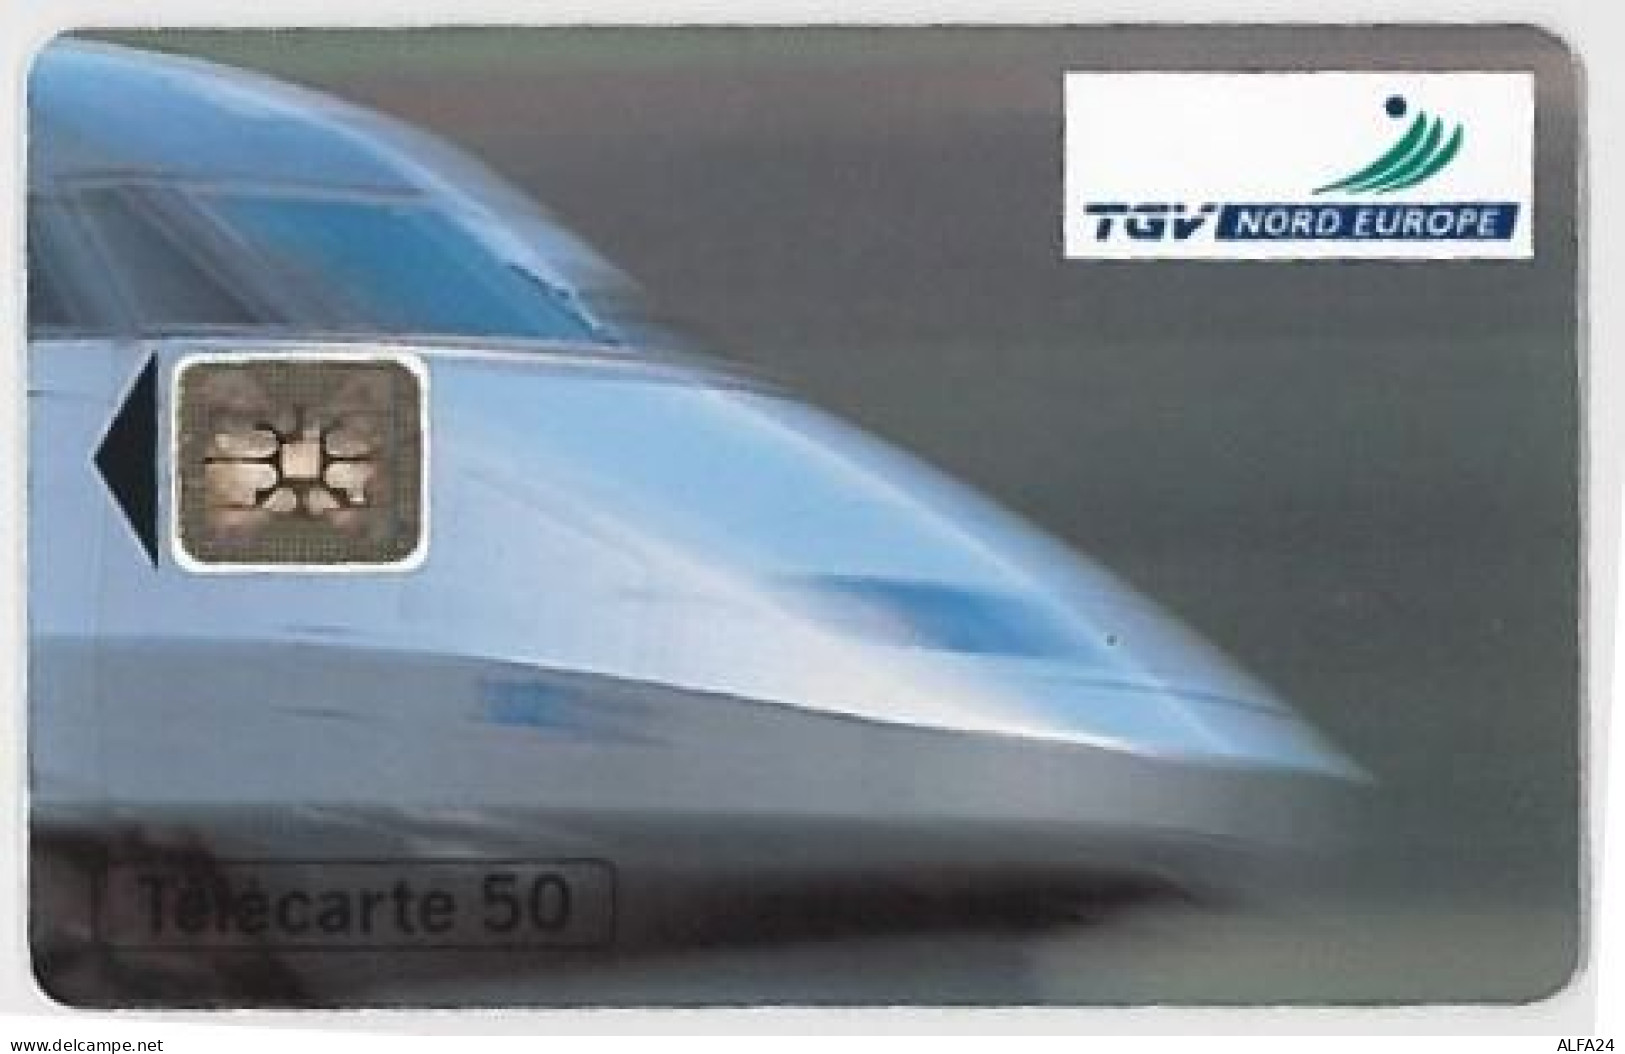 TELECARTE F360 TGV NORD EUROPE - 1993